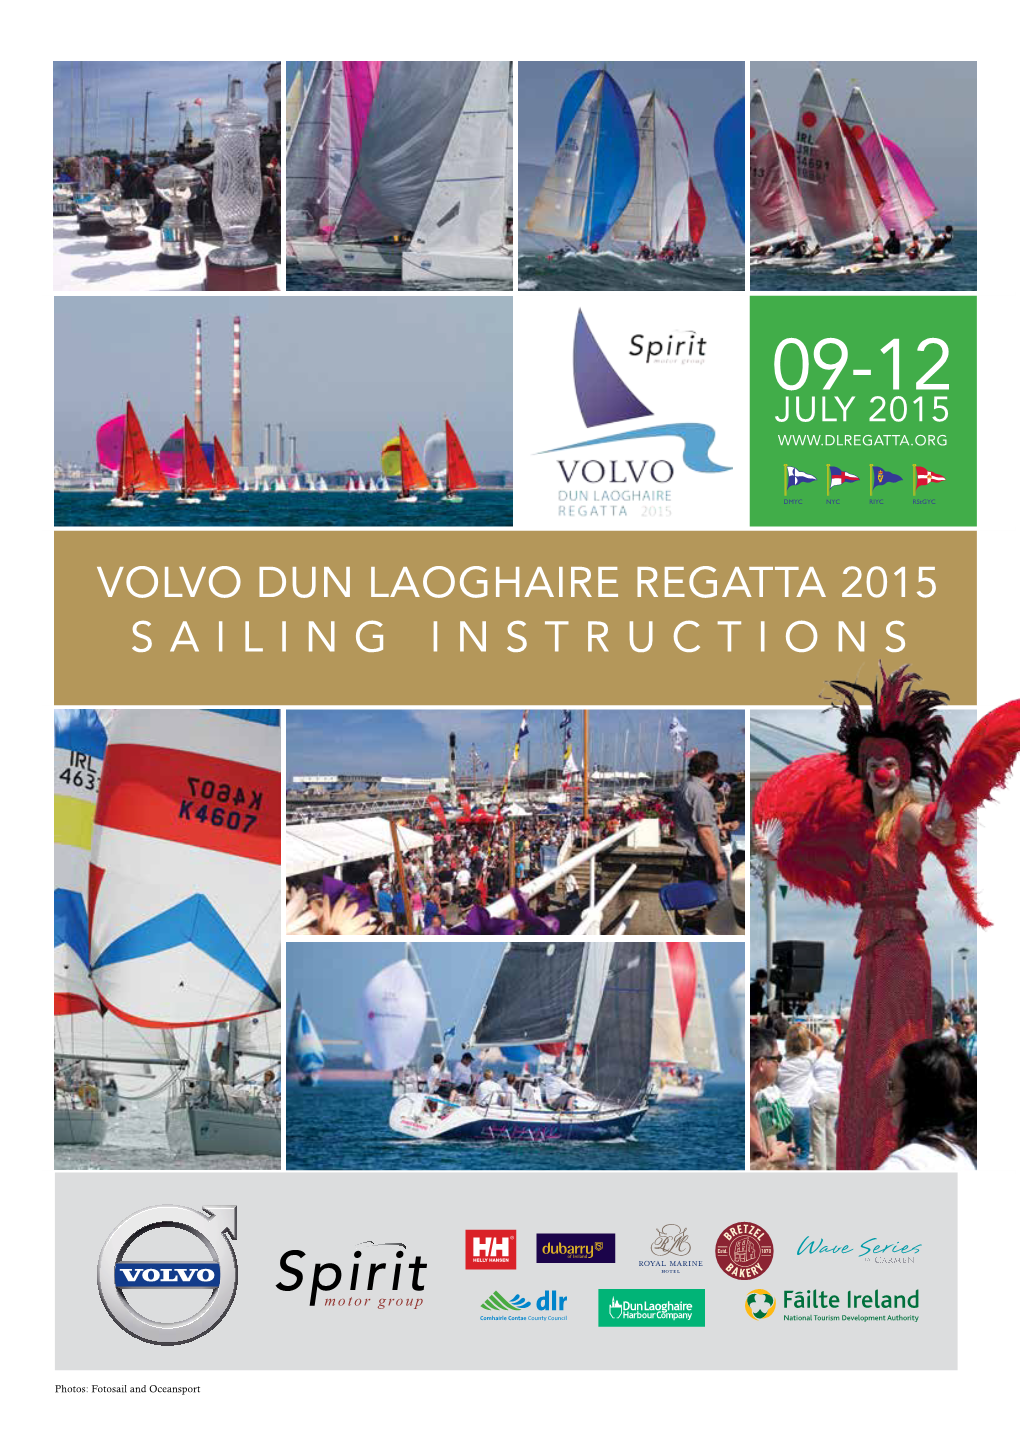 Volvo Dun Laoghaire Regatta 2015 Sailing Instructions